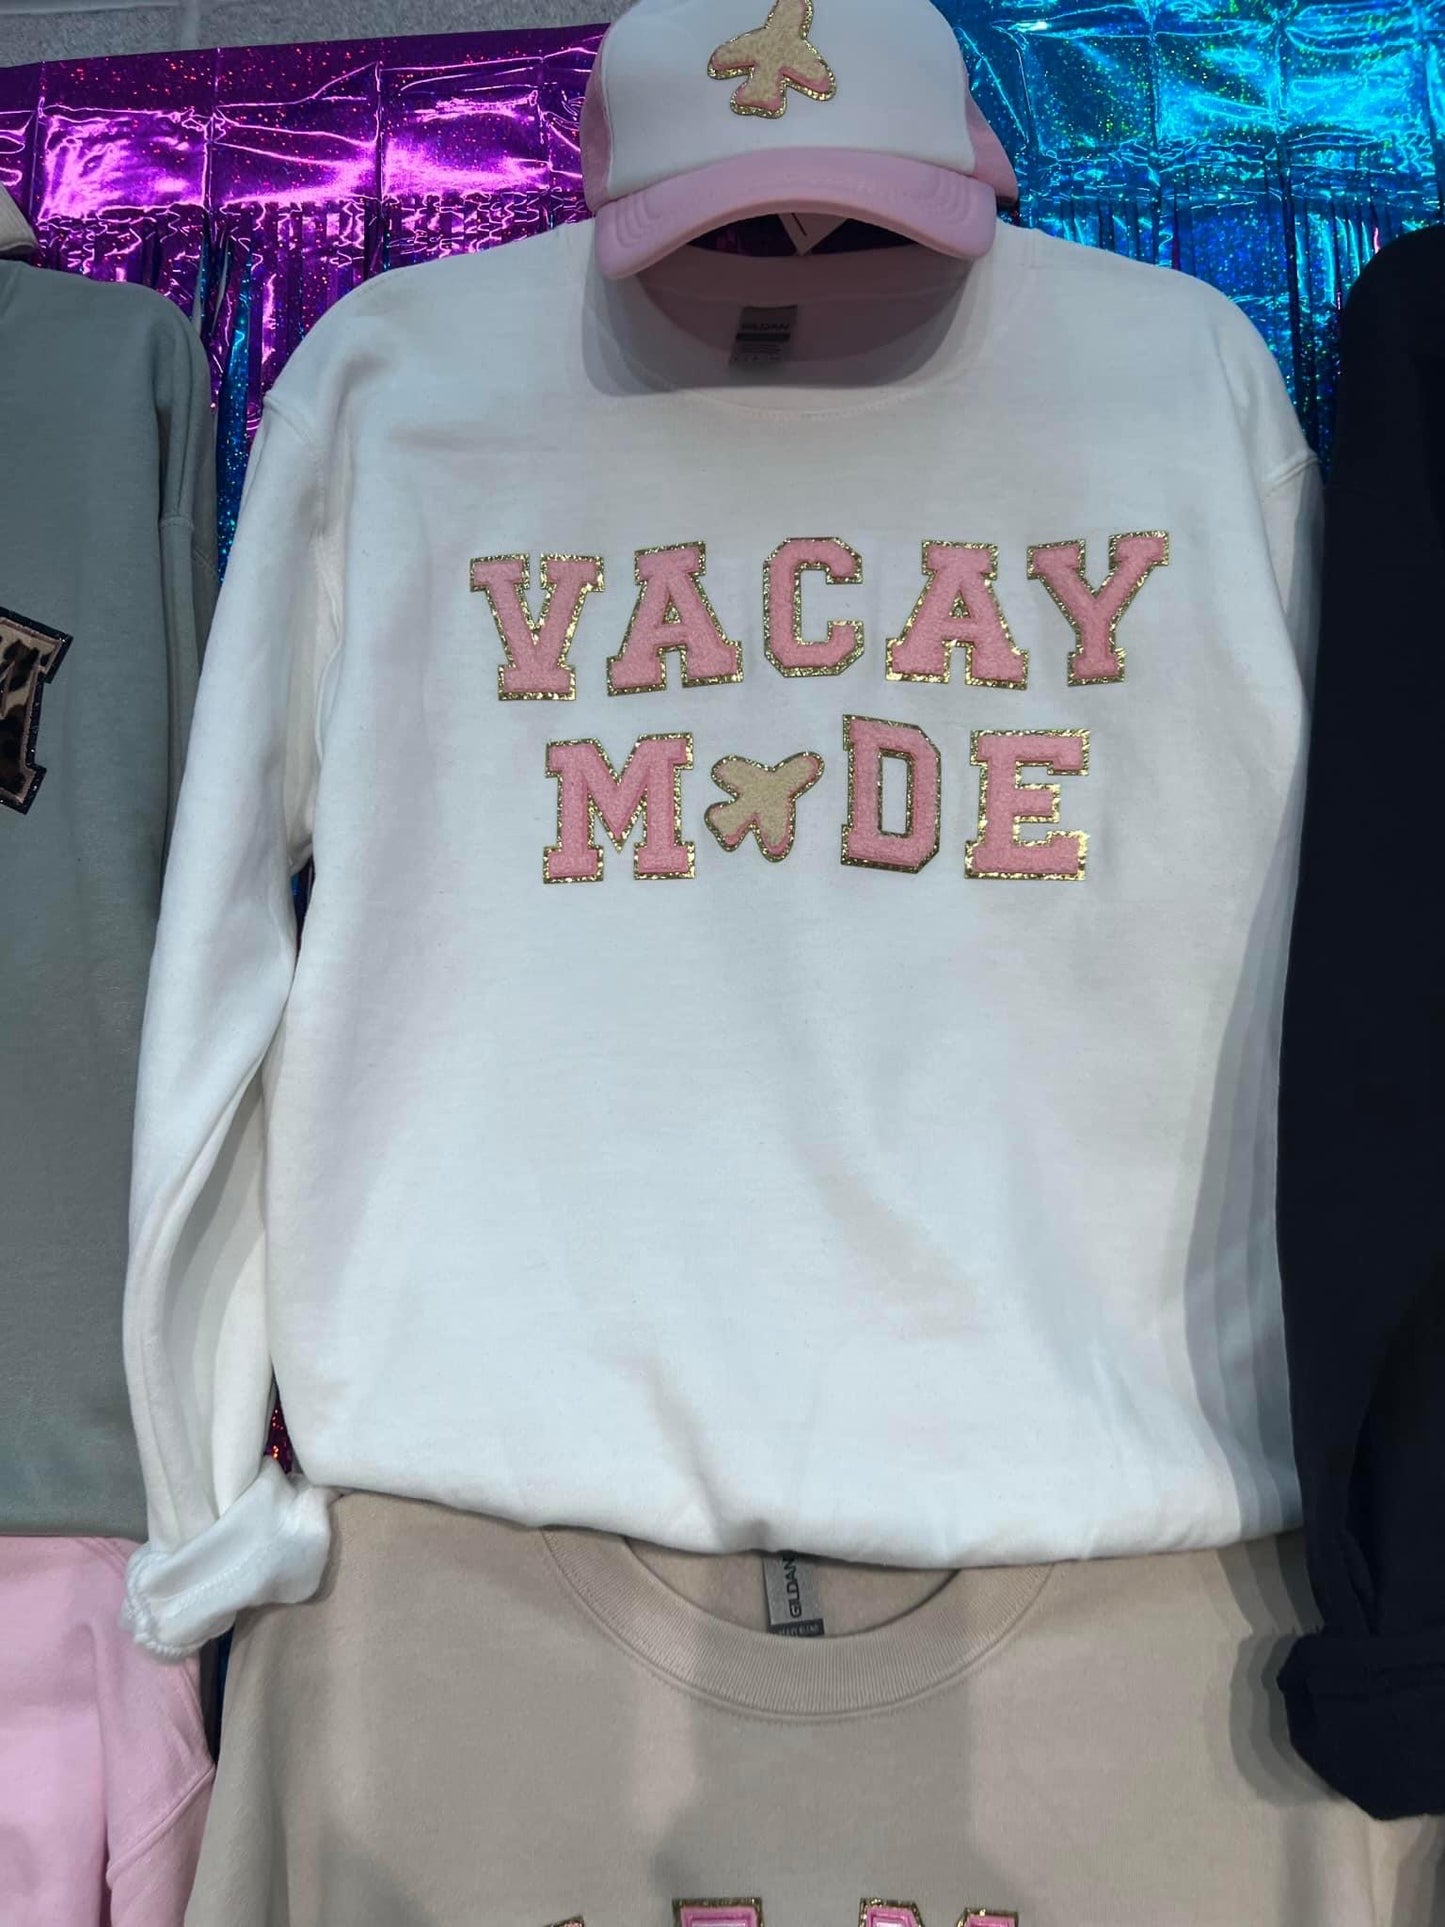 Vacay Mode Patch Tee/Sweatshirt